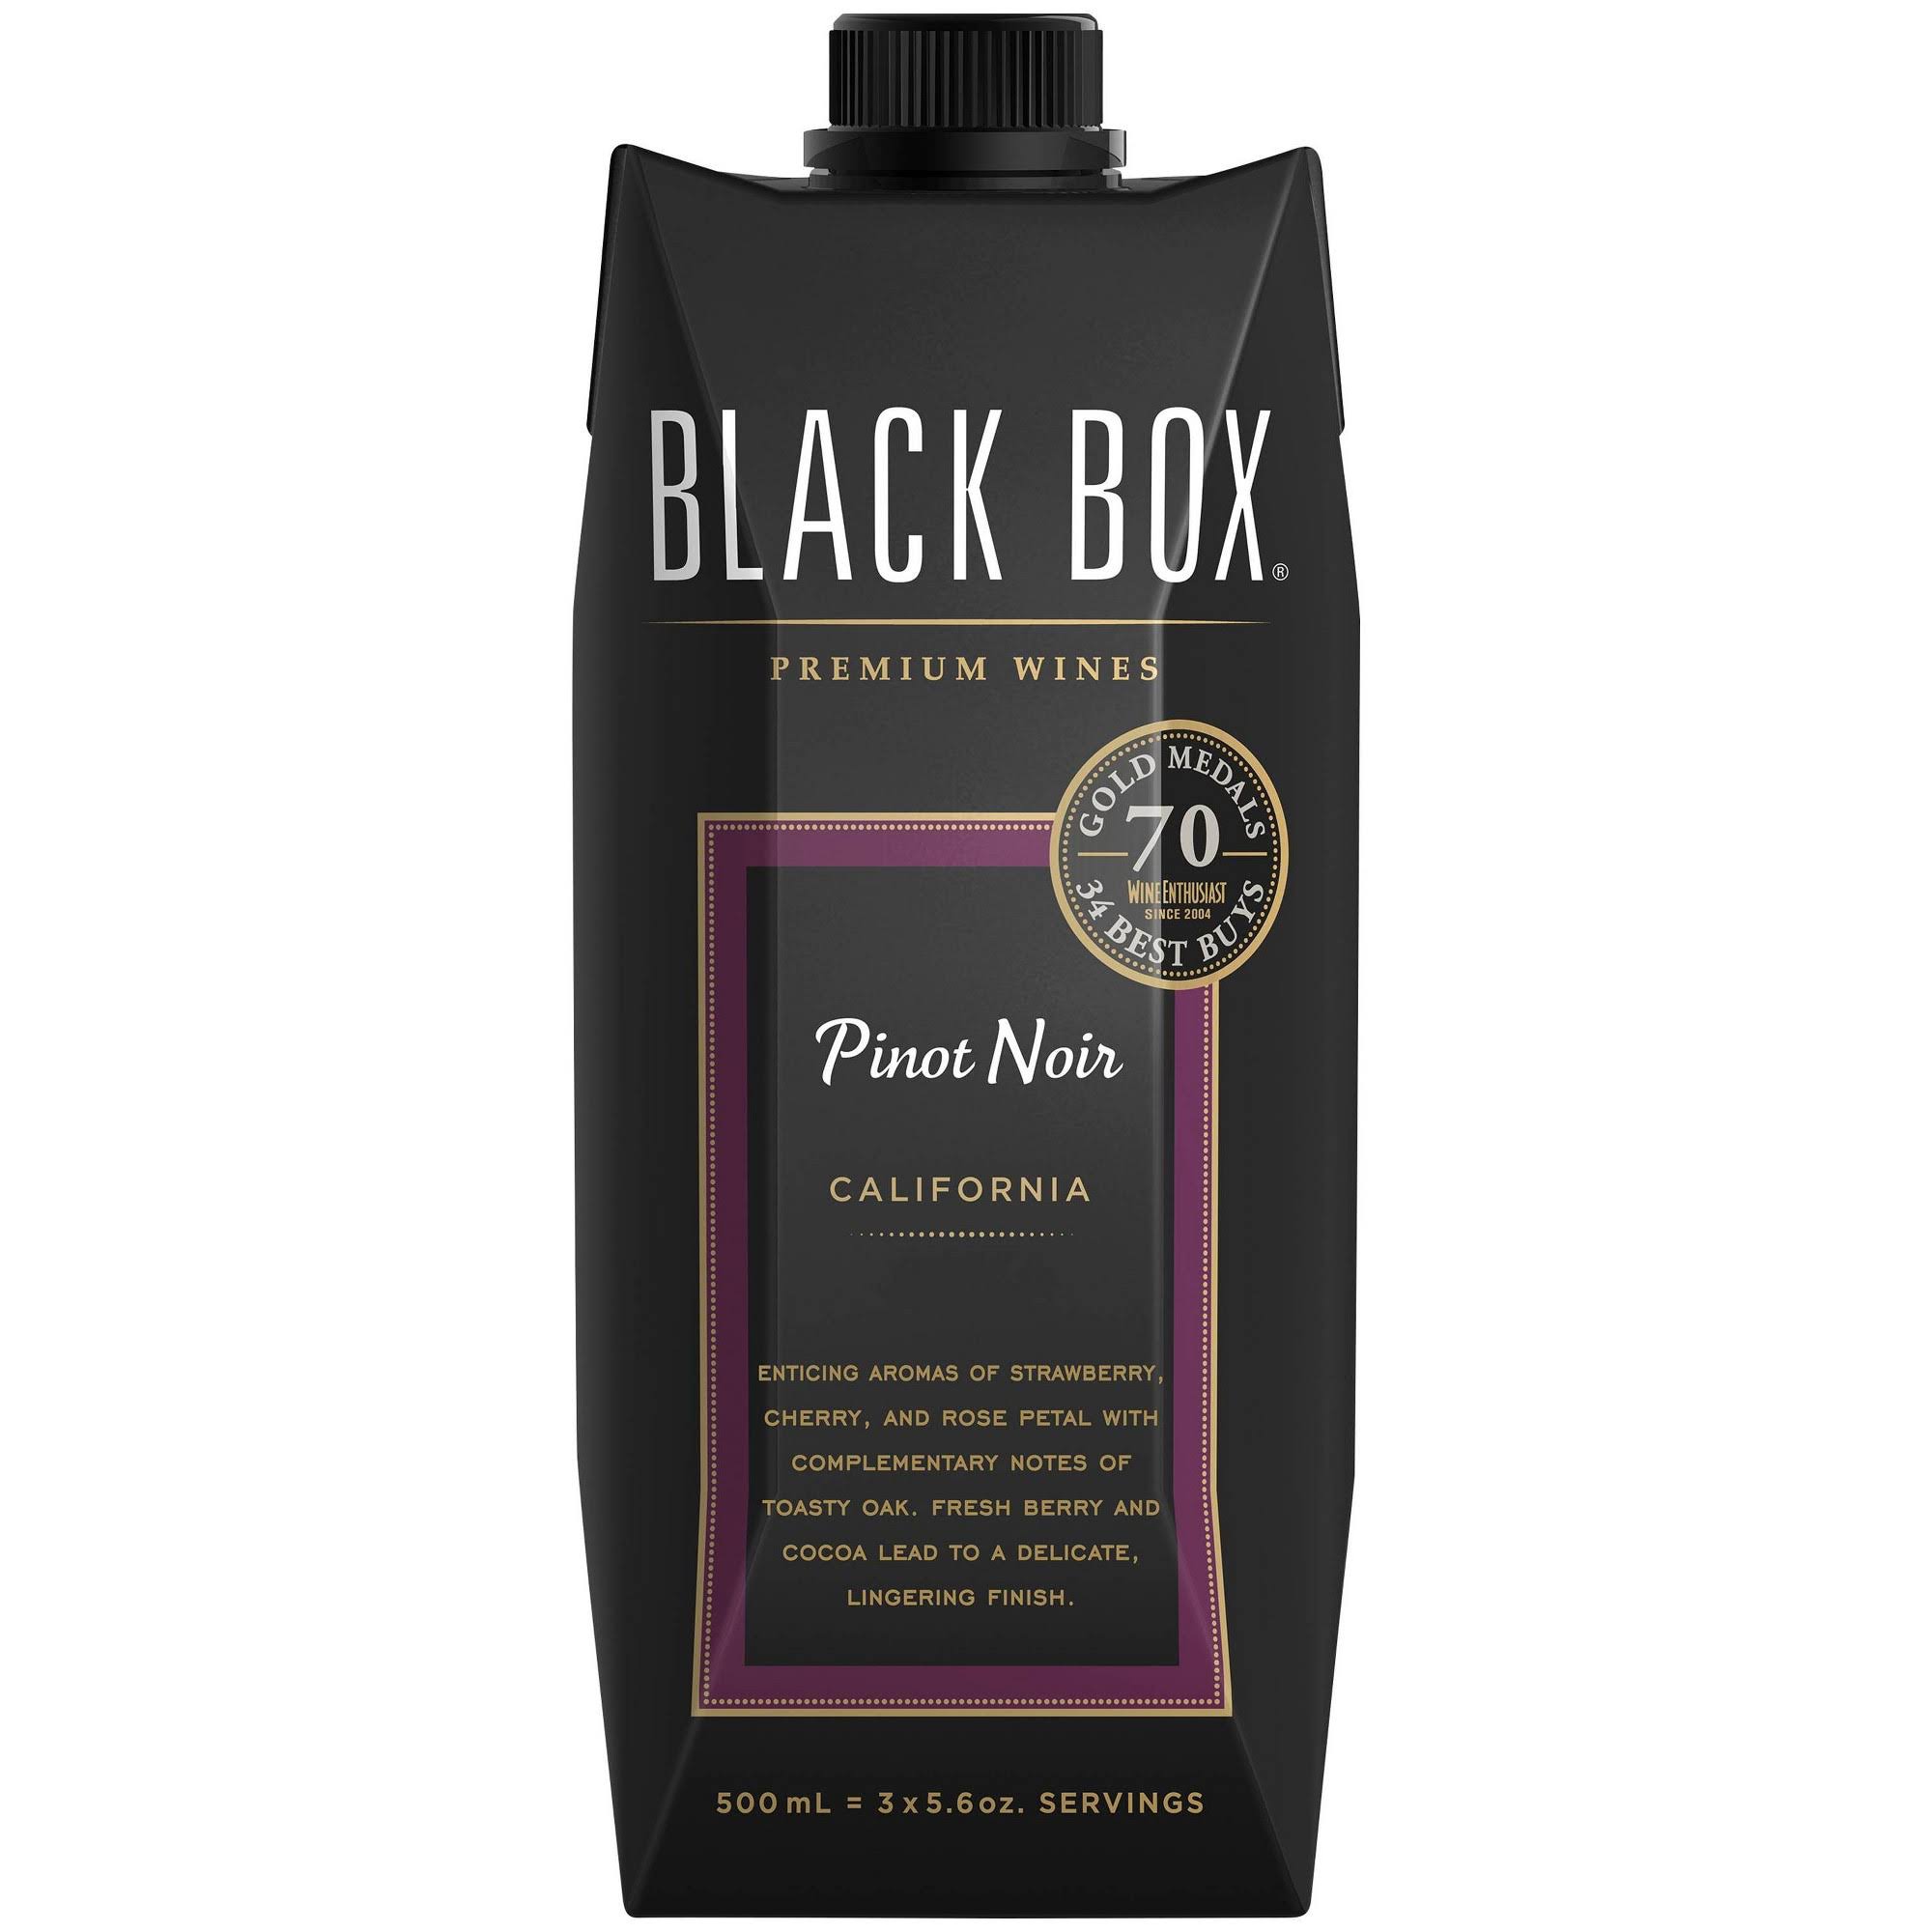 Black Box Pinot Noir, California, 2015 - 500 ml